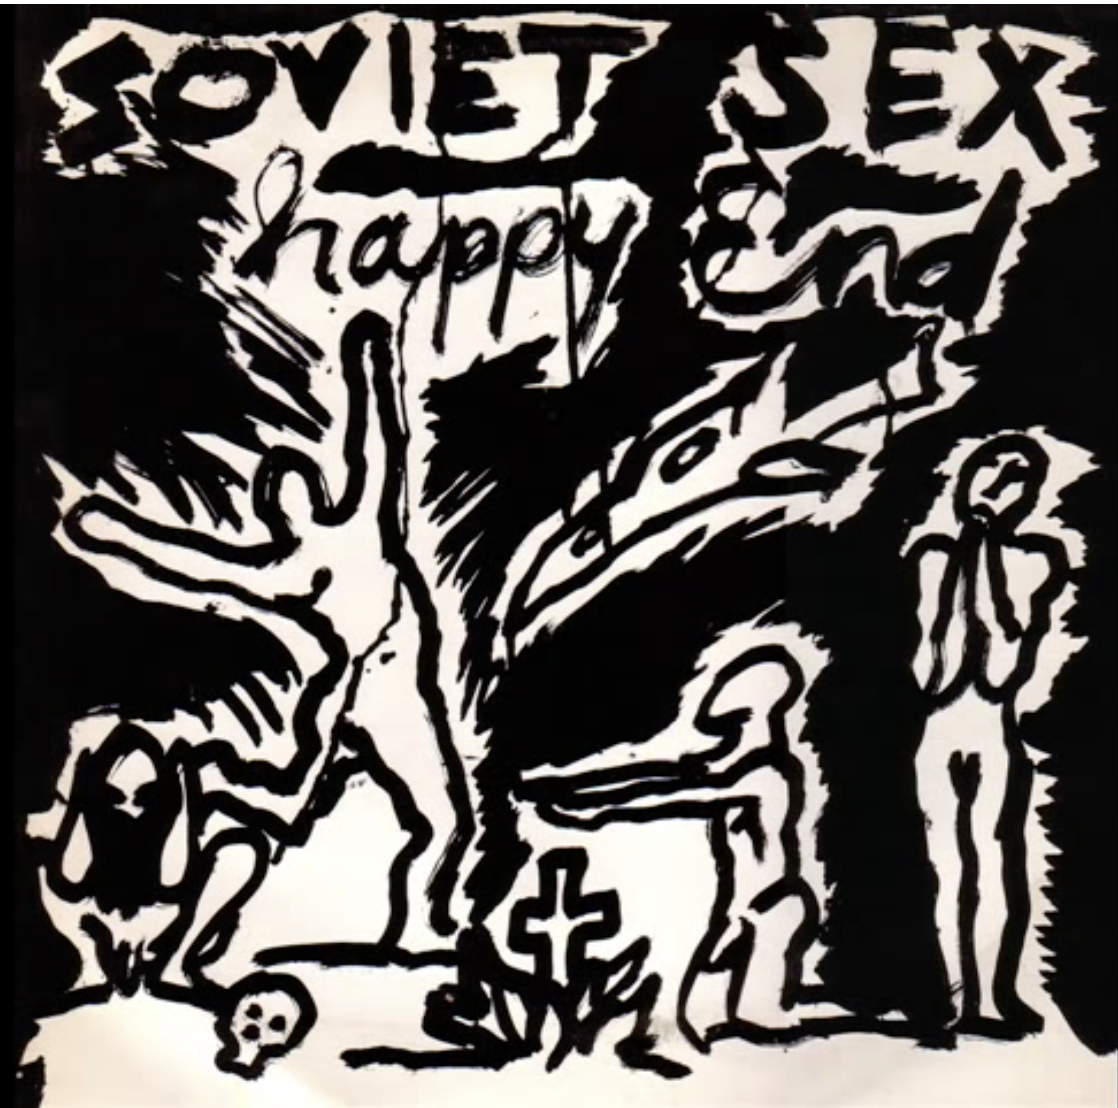 Soviet Sex “Another World” 1998